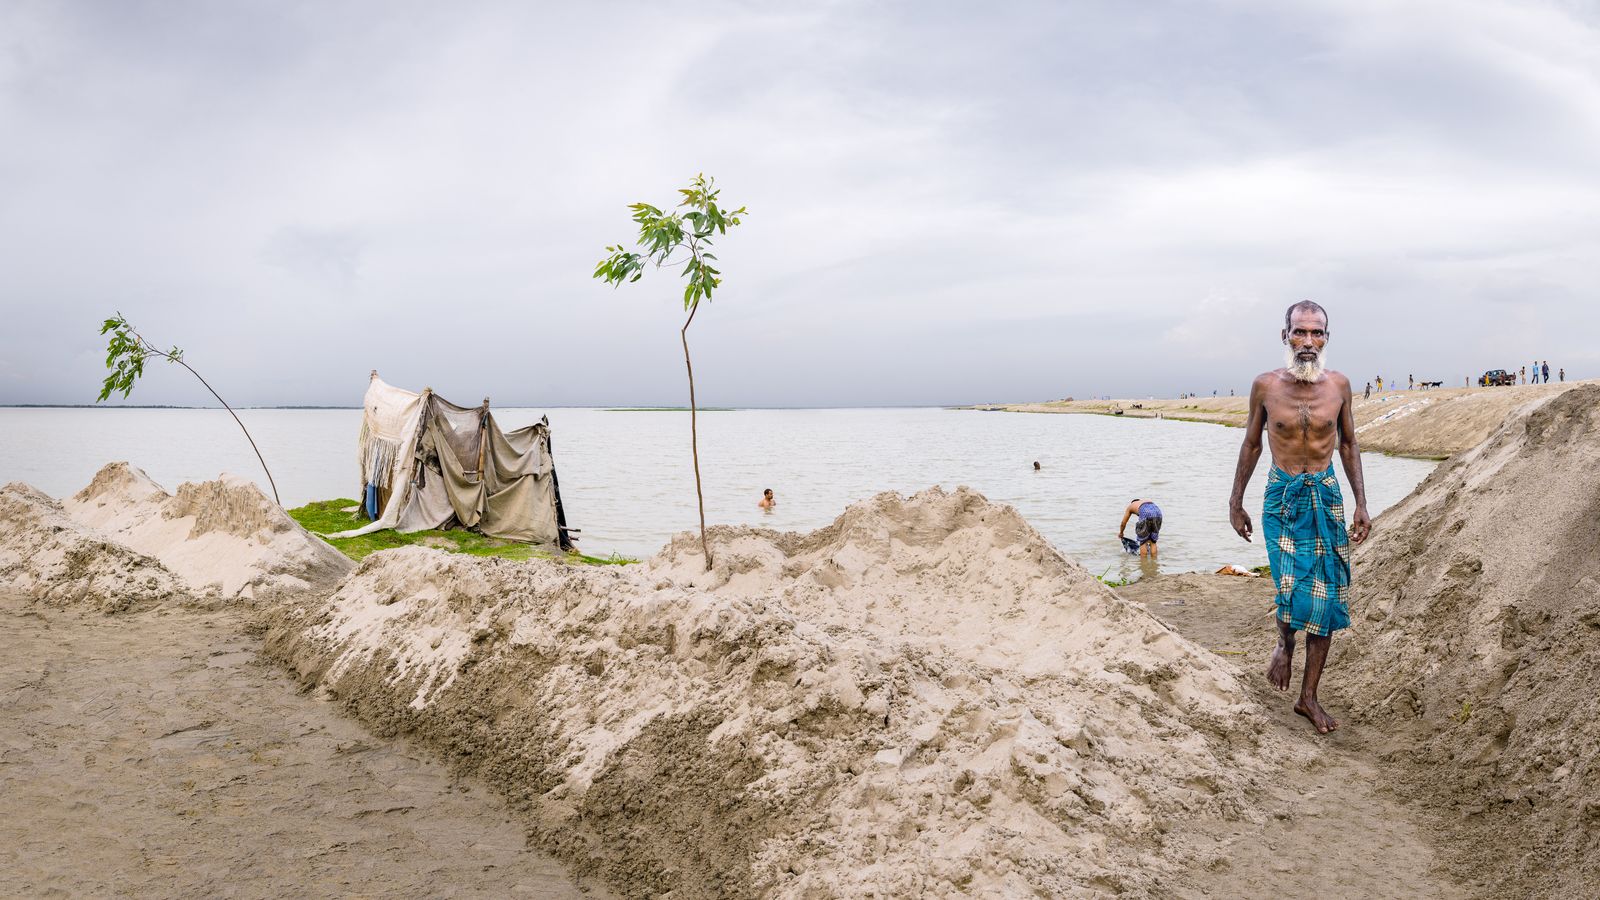 © Carrie and Eric Tomberlin - Monsoon Season Encampment of Mobile Village, Sirajganj